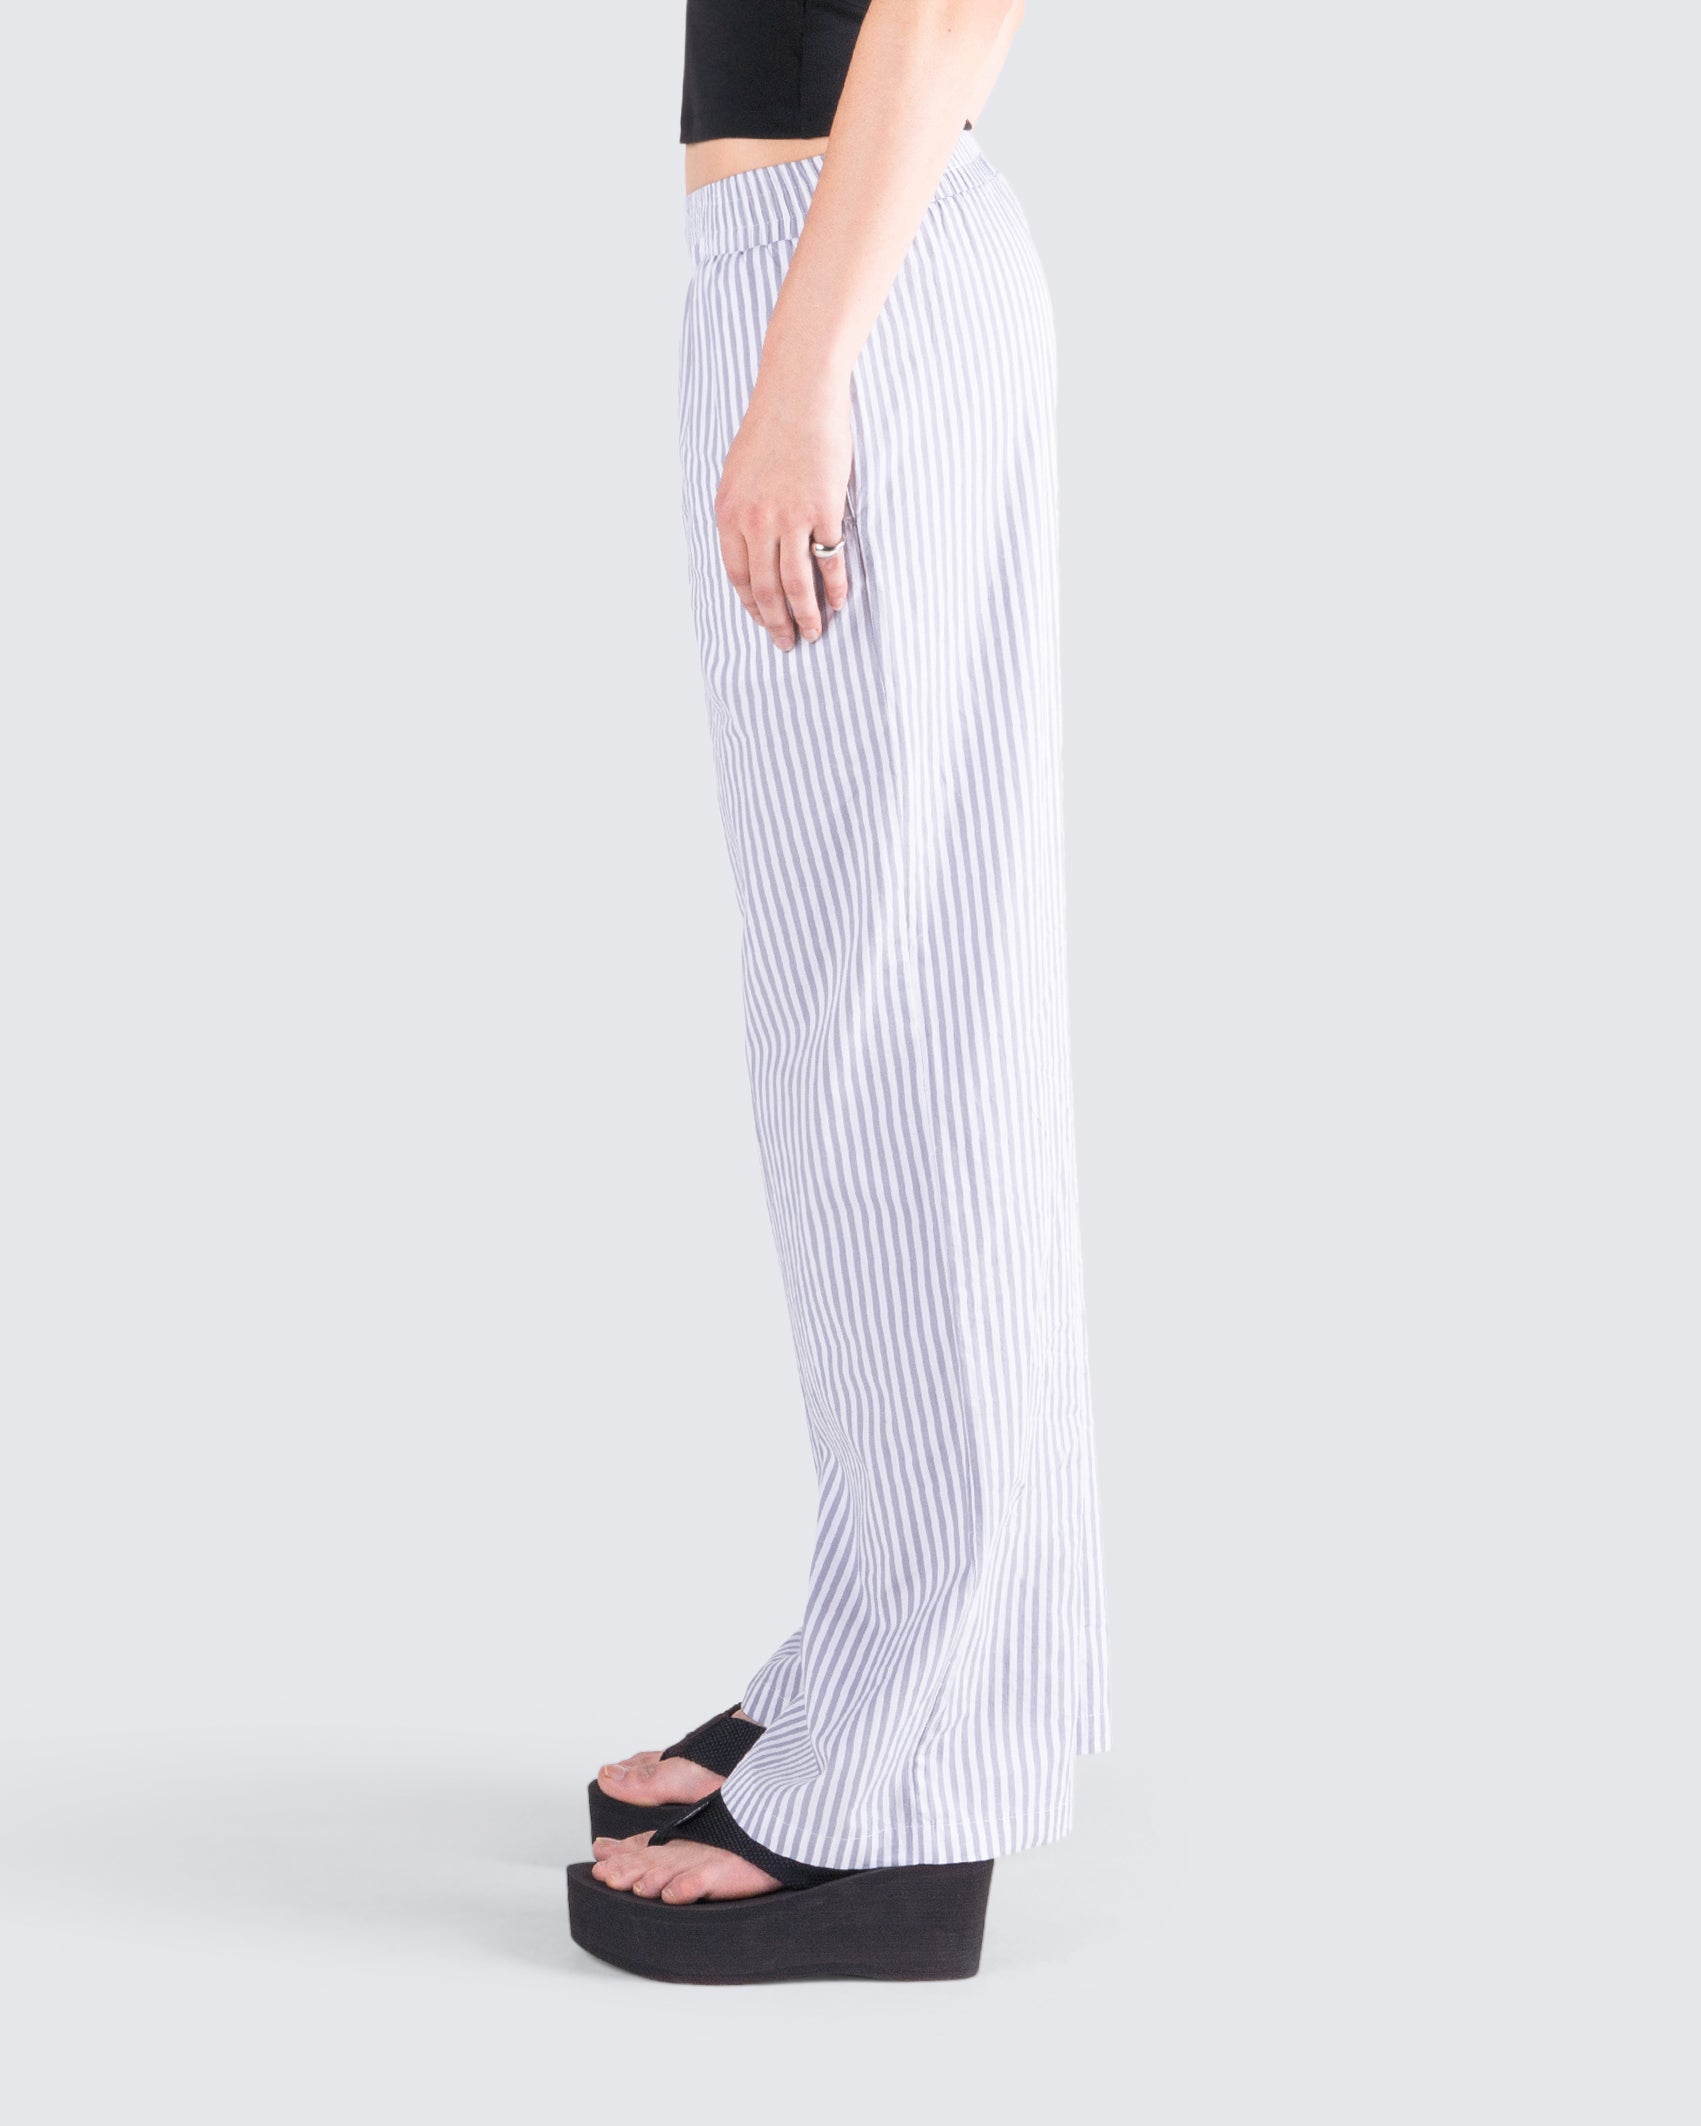 Buy Men's Grey Striped Casual Pants Online at Bewakoof